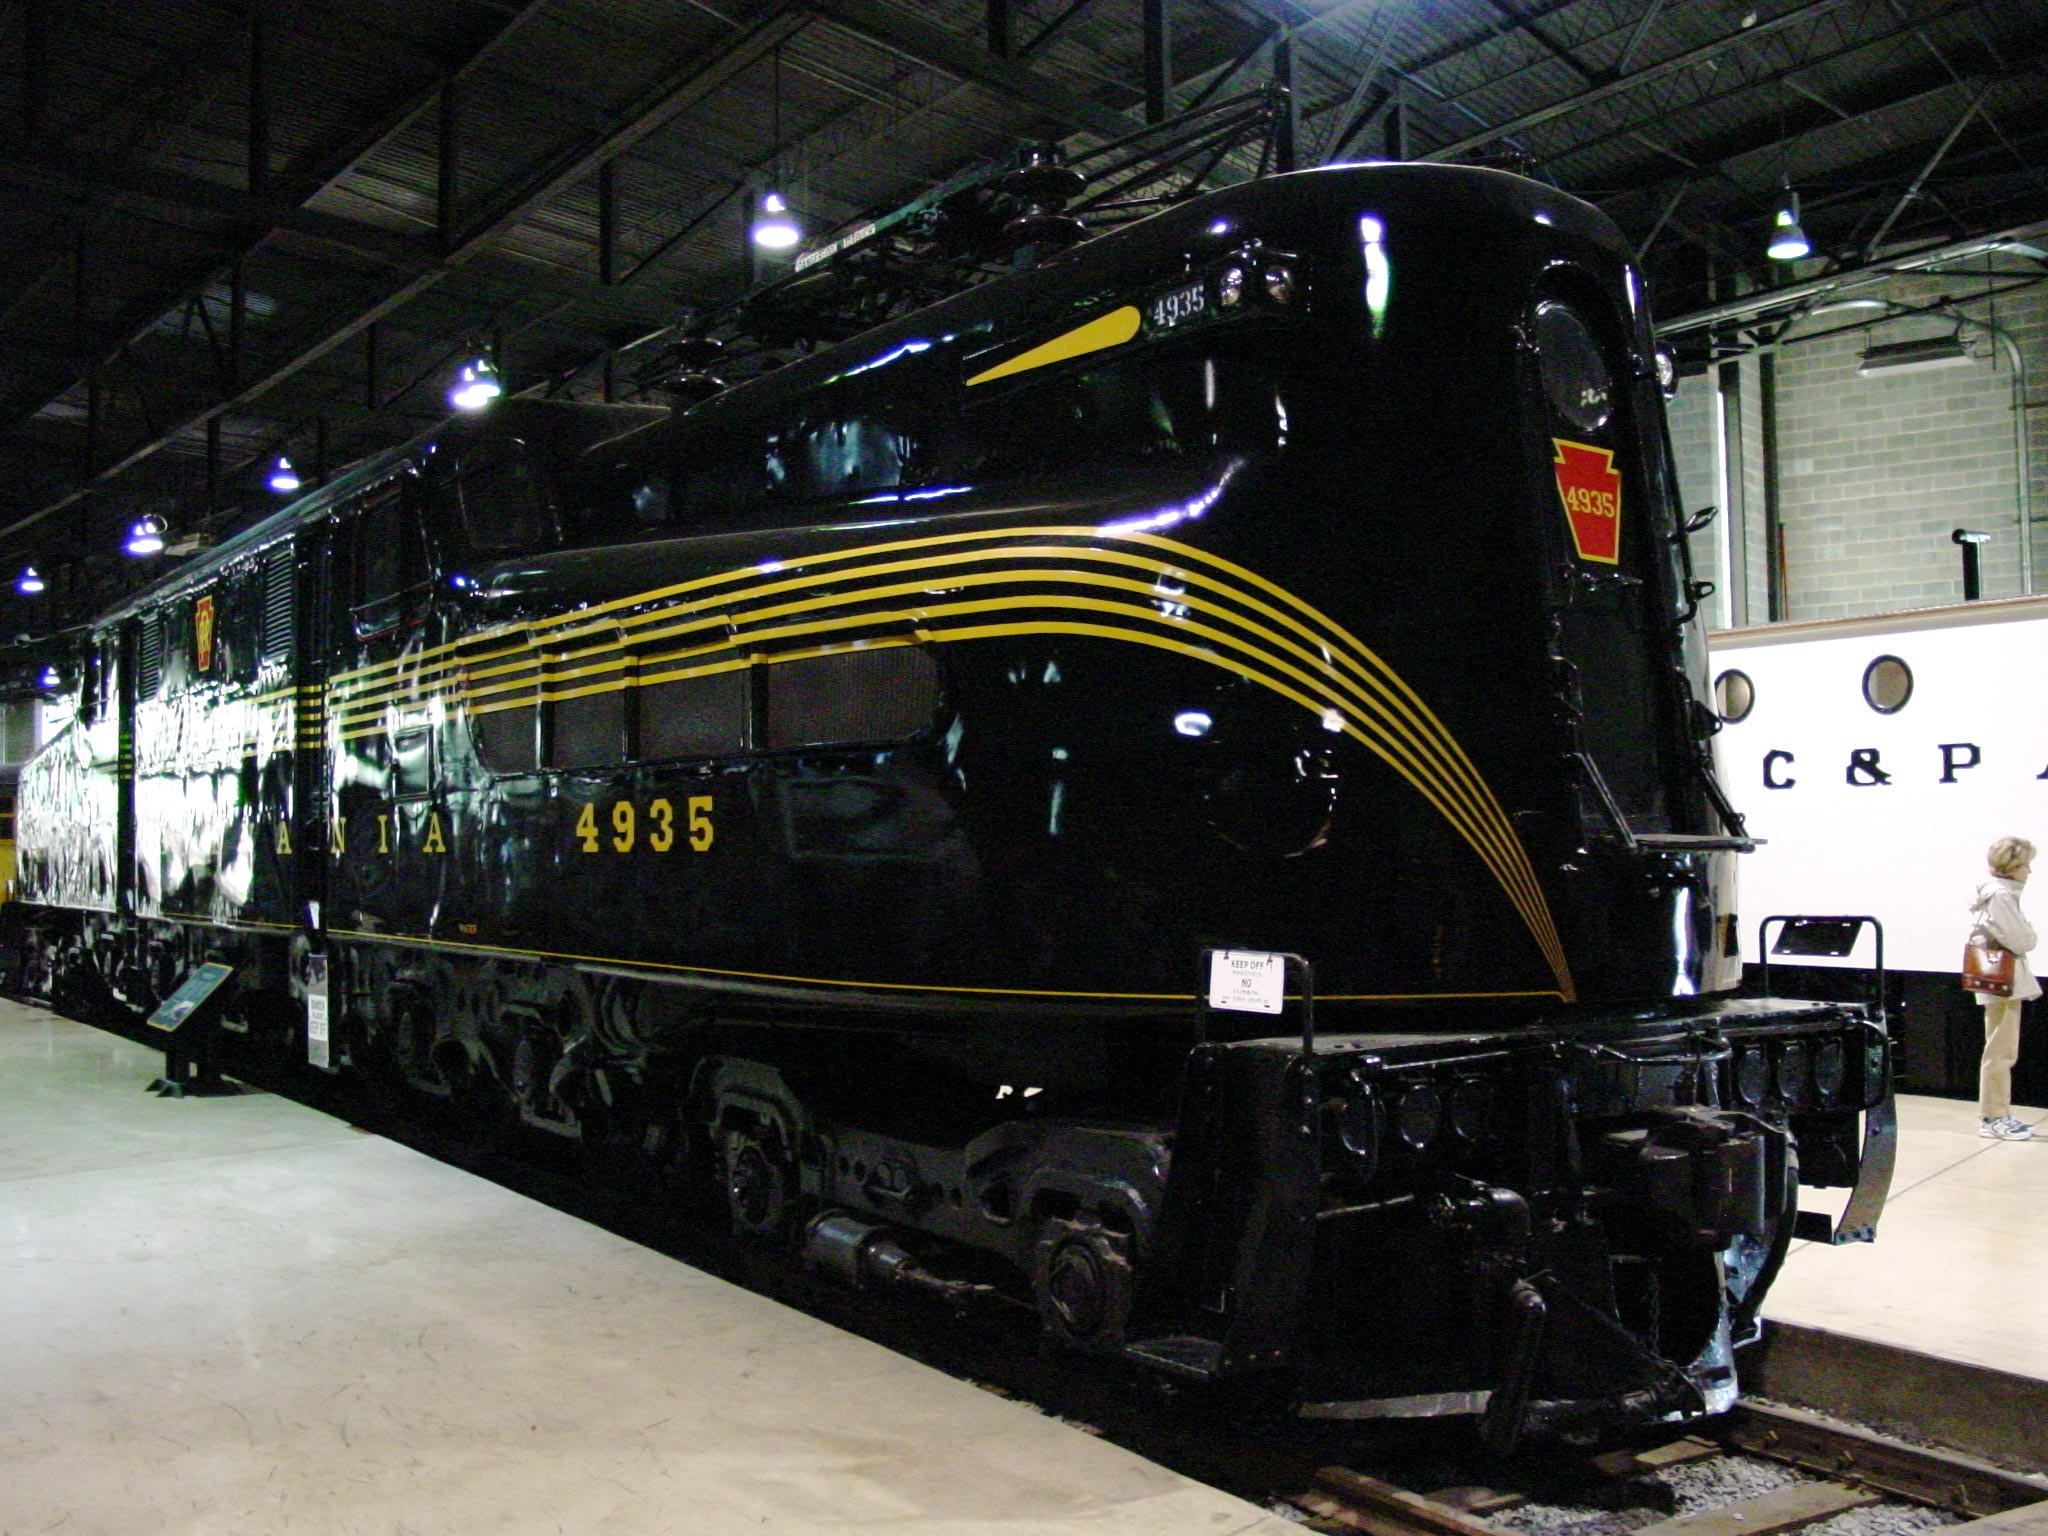 Most beautiful locomotive, the Pennsylvania Railroad's GG1, enhanced aesthetic by designer Raymond Loewy